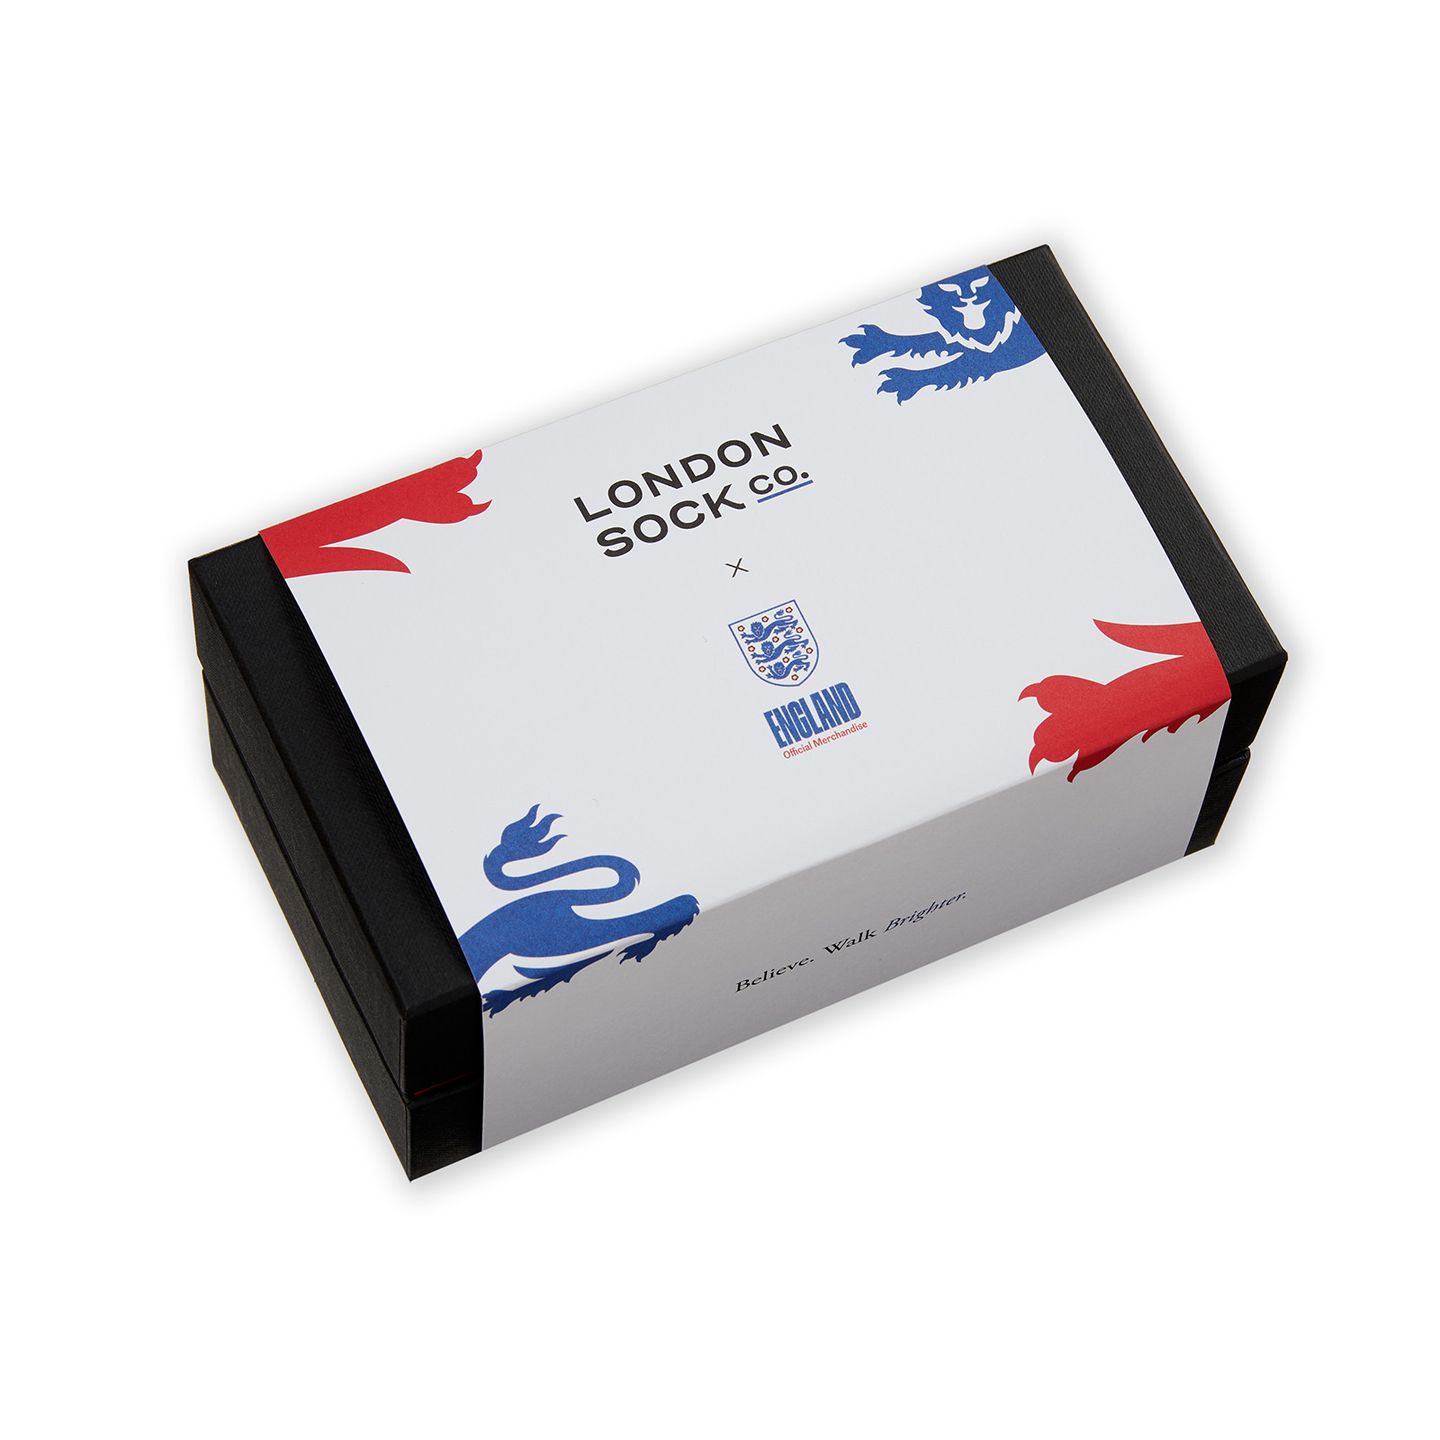 London Sock Company and England Merchandise collaboration box